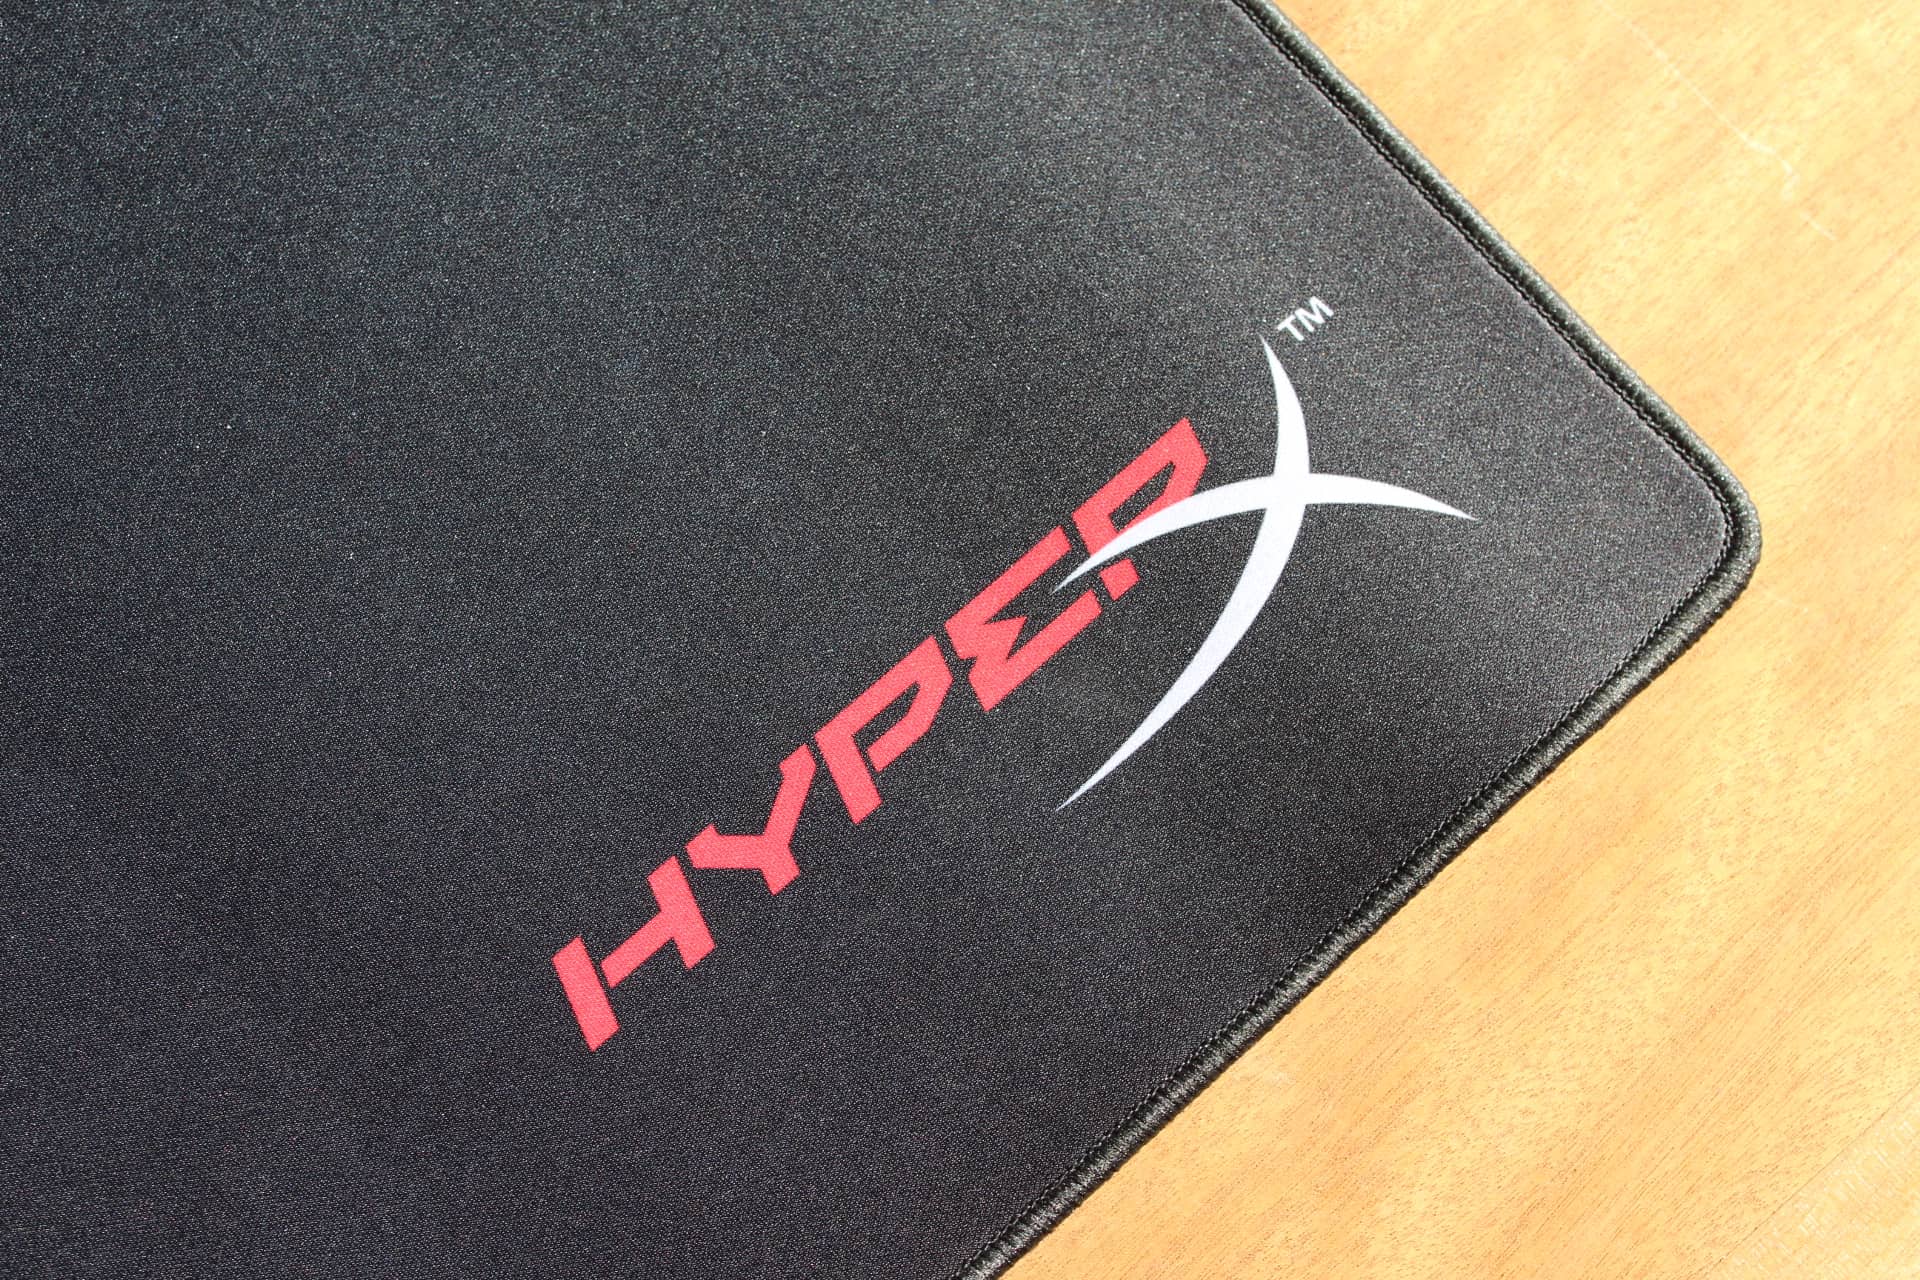 Hyperx fury s pro. HYPERX Fury s Pro XL. HYPERX Fury s Speed. HYPERX Fury s (XL). HYPERX Fury s Pro XL [Control].